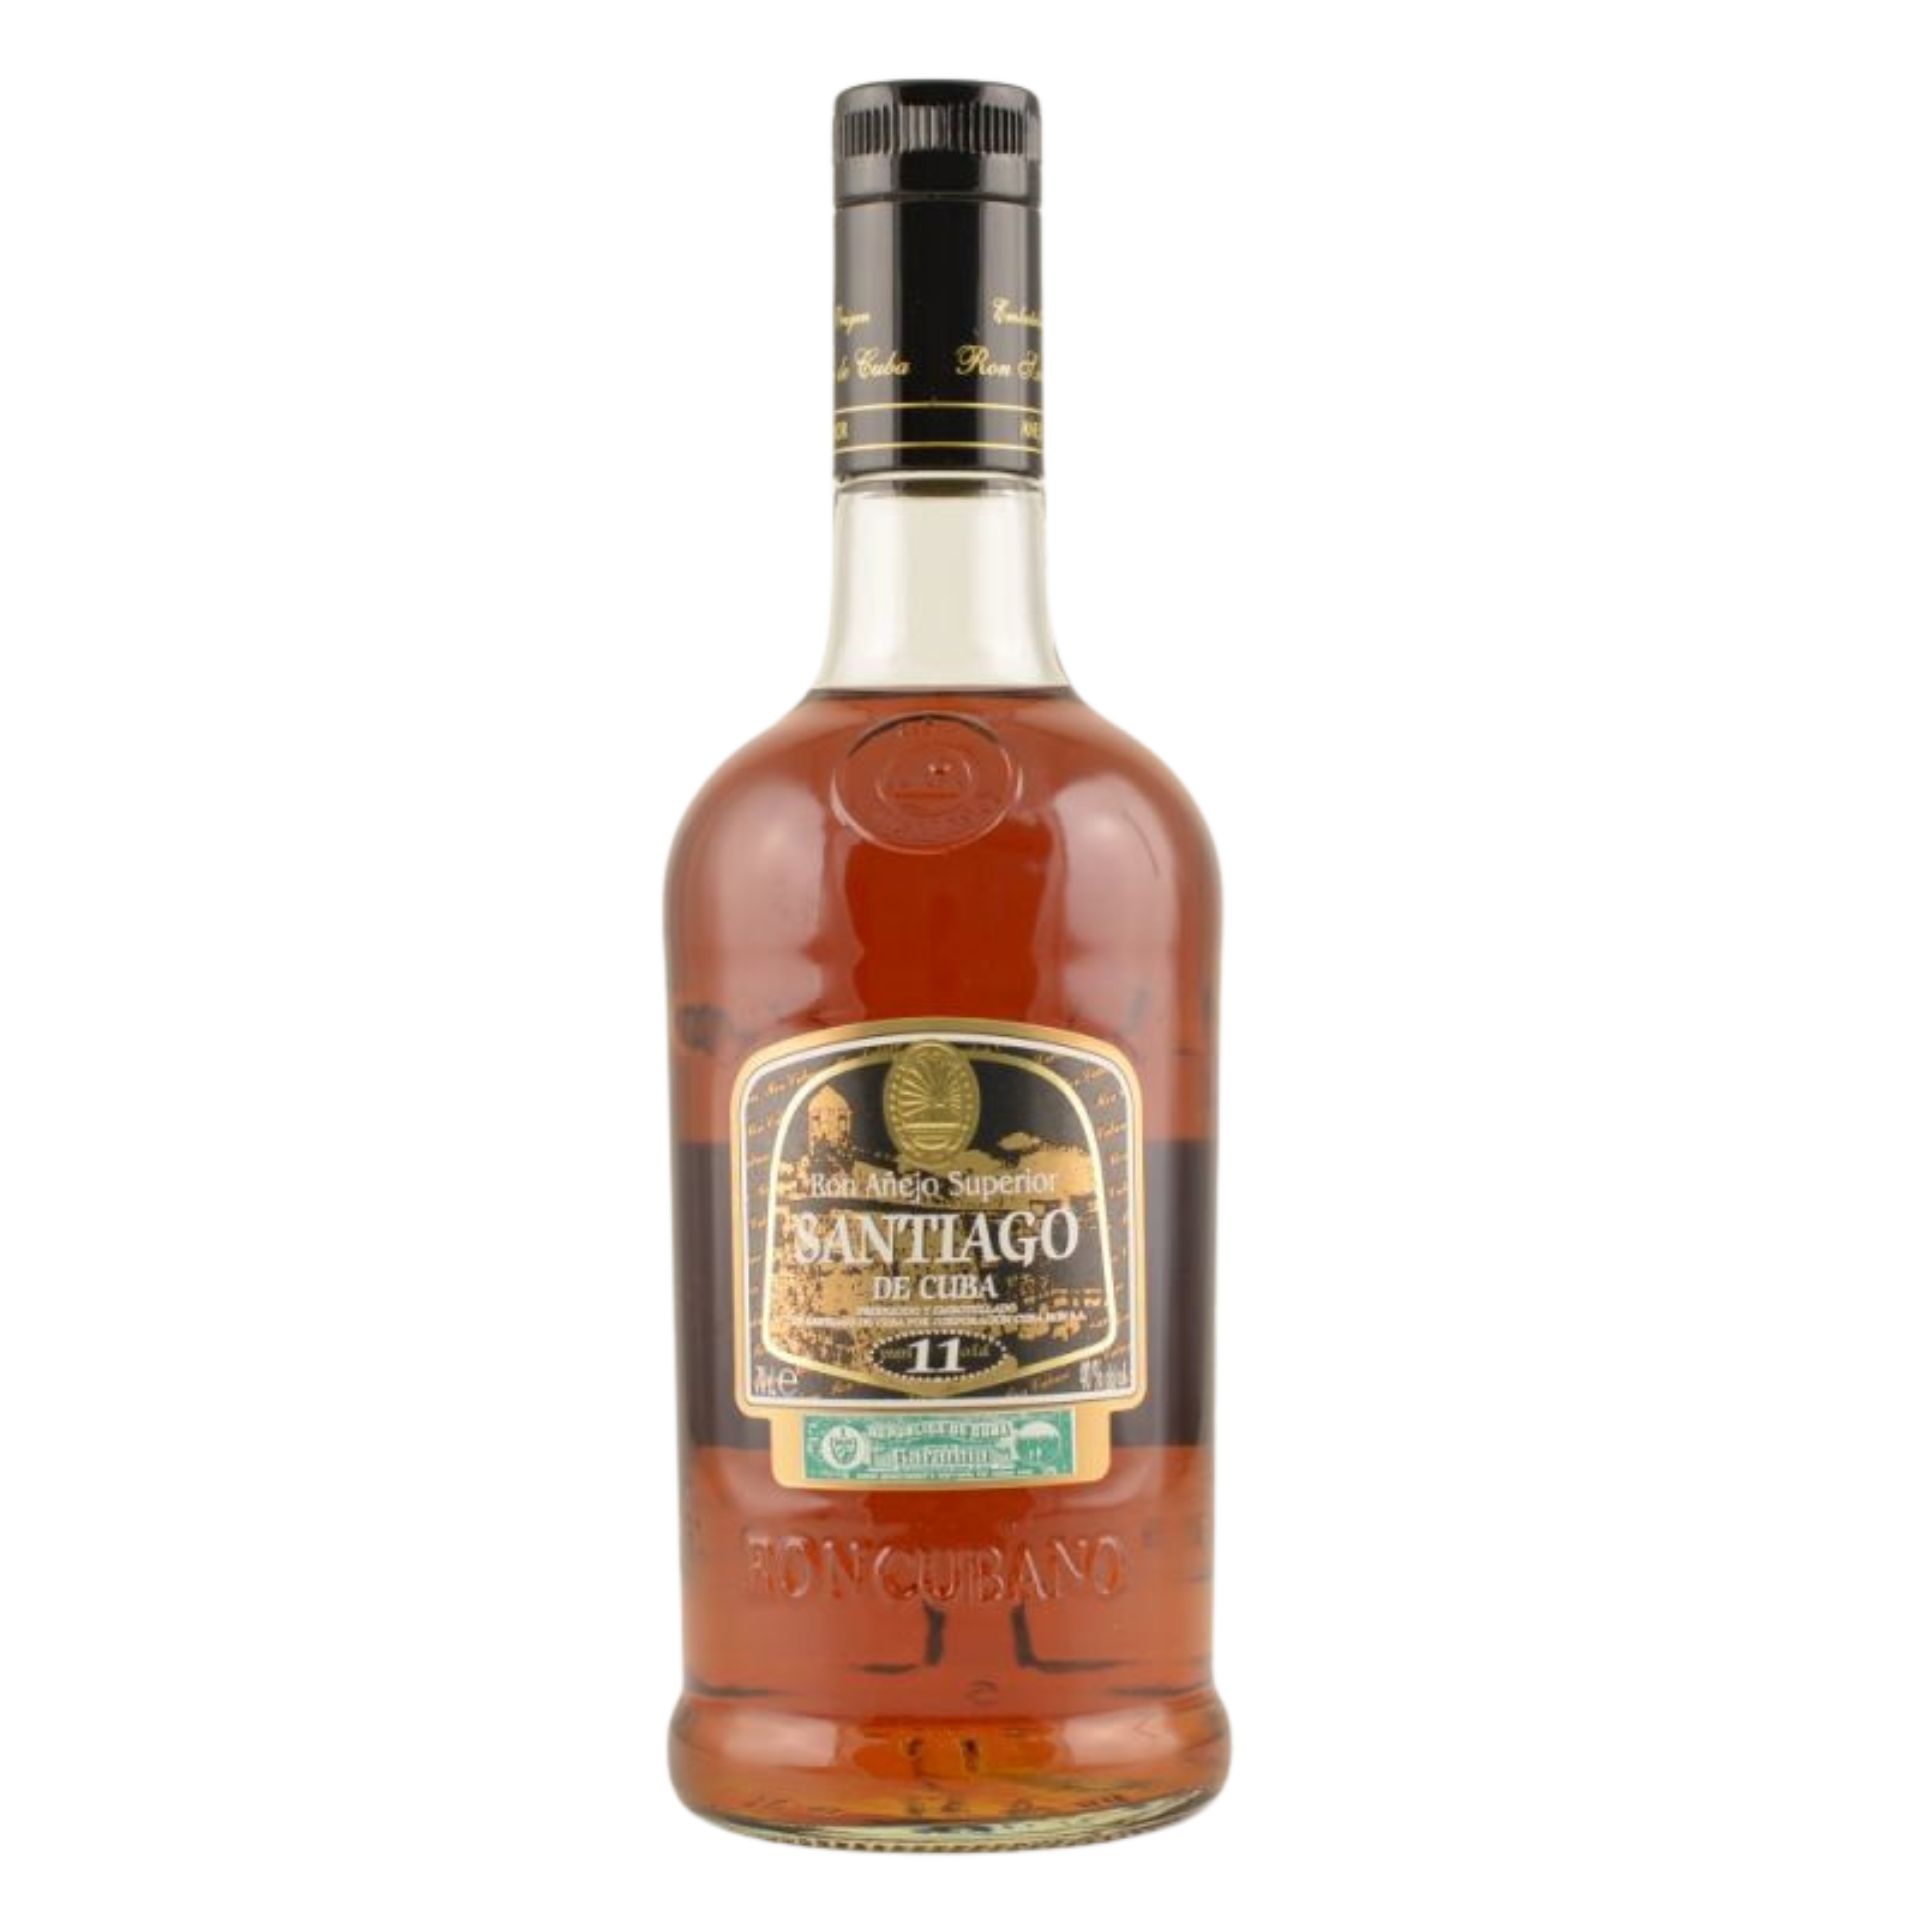 Santiago de Cuba Anejo Superior 11 Jahre Rum 40% 0,7l